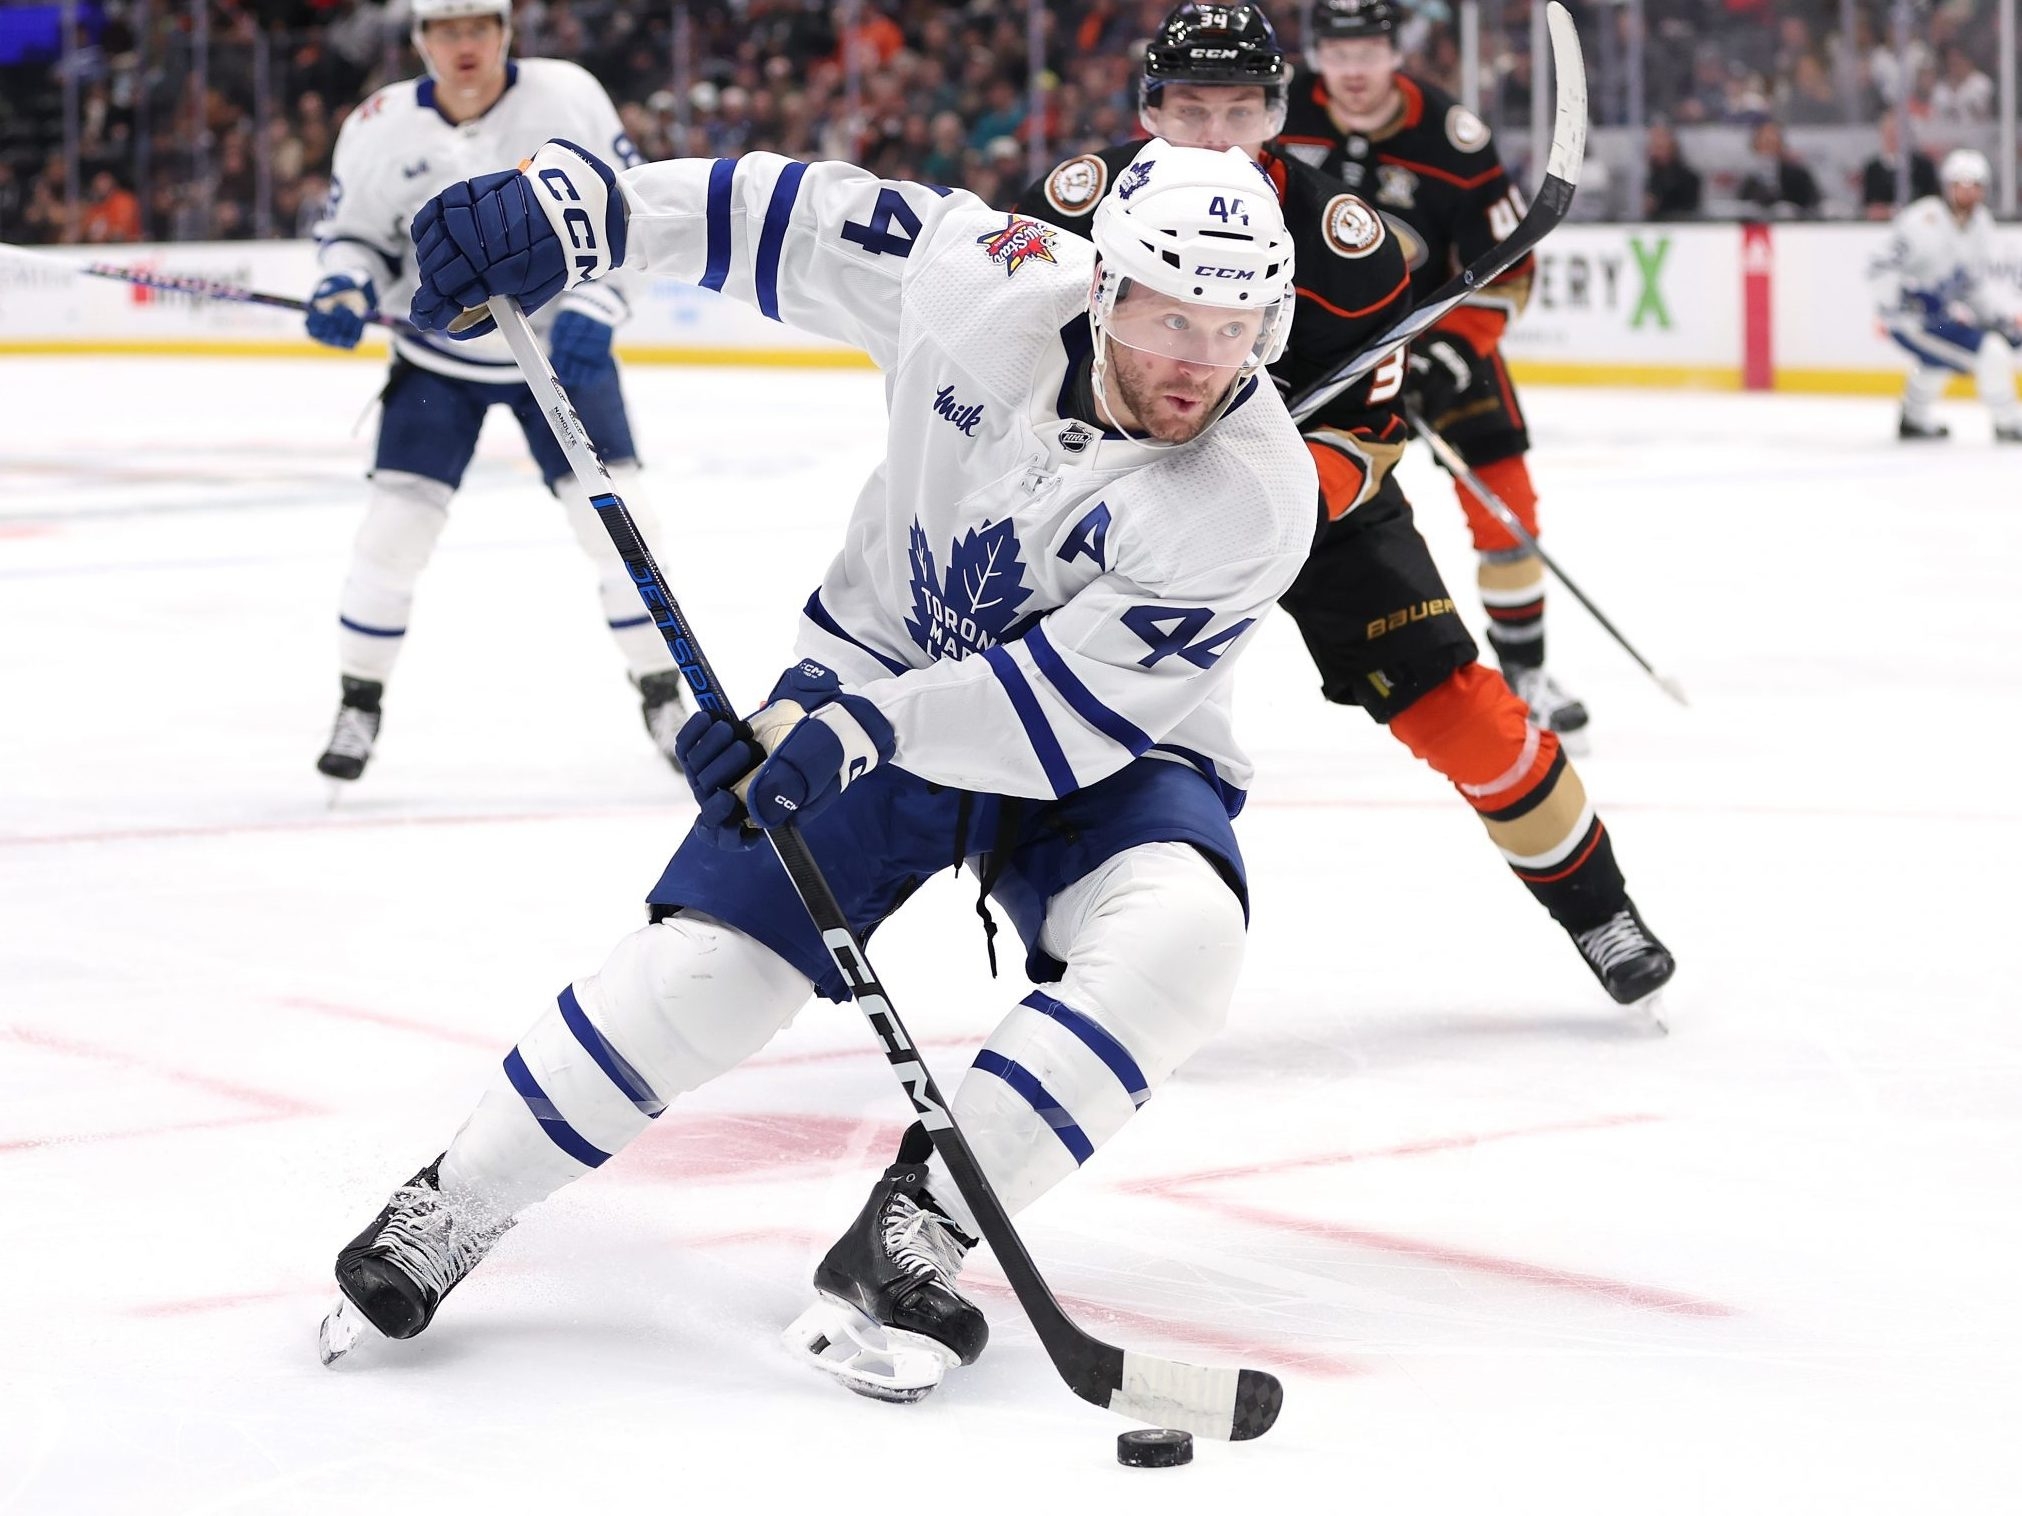 Toronto Maple Leafs' Mitch Marner progressing, Tyler Bertuzzi